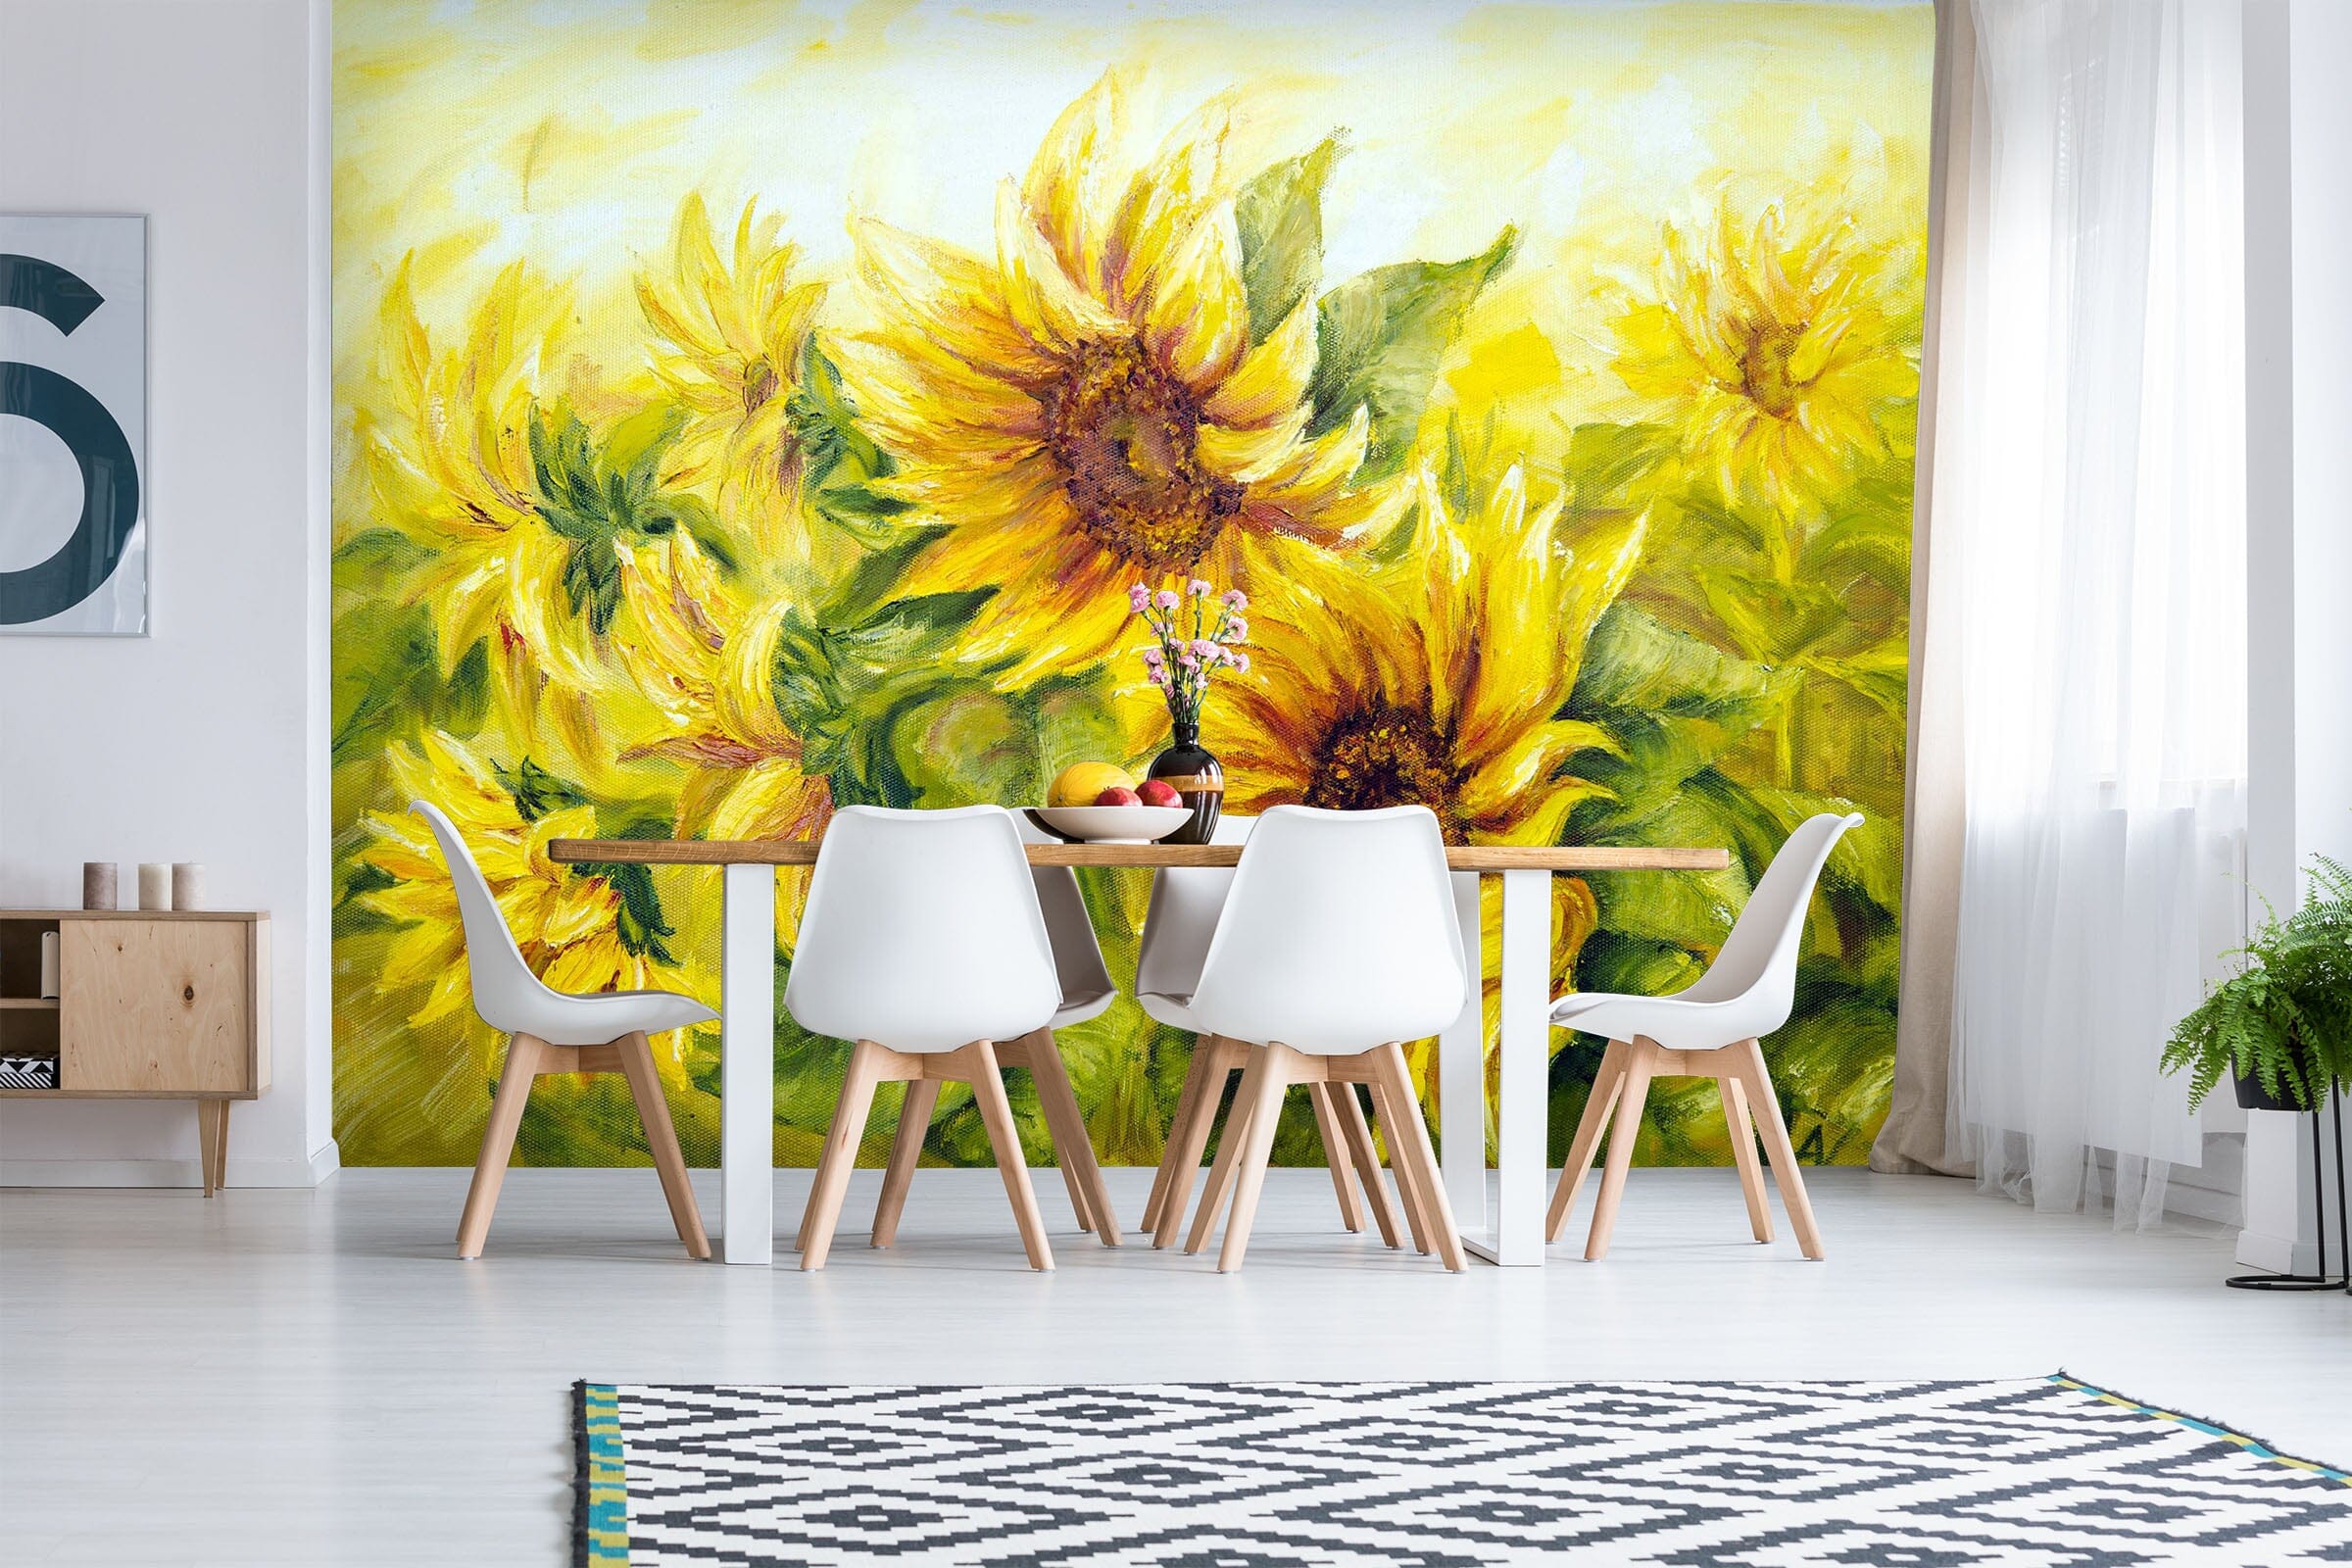 Sunflower Wallpaper Images - Free Download on Freepik